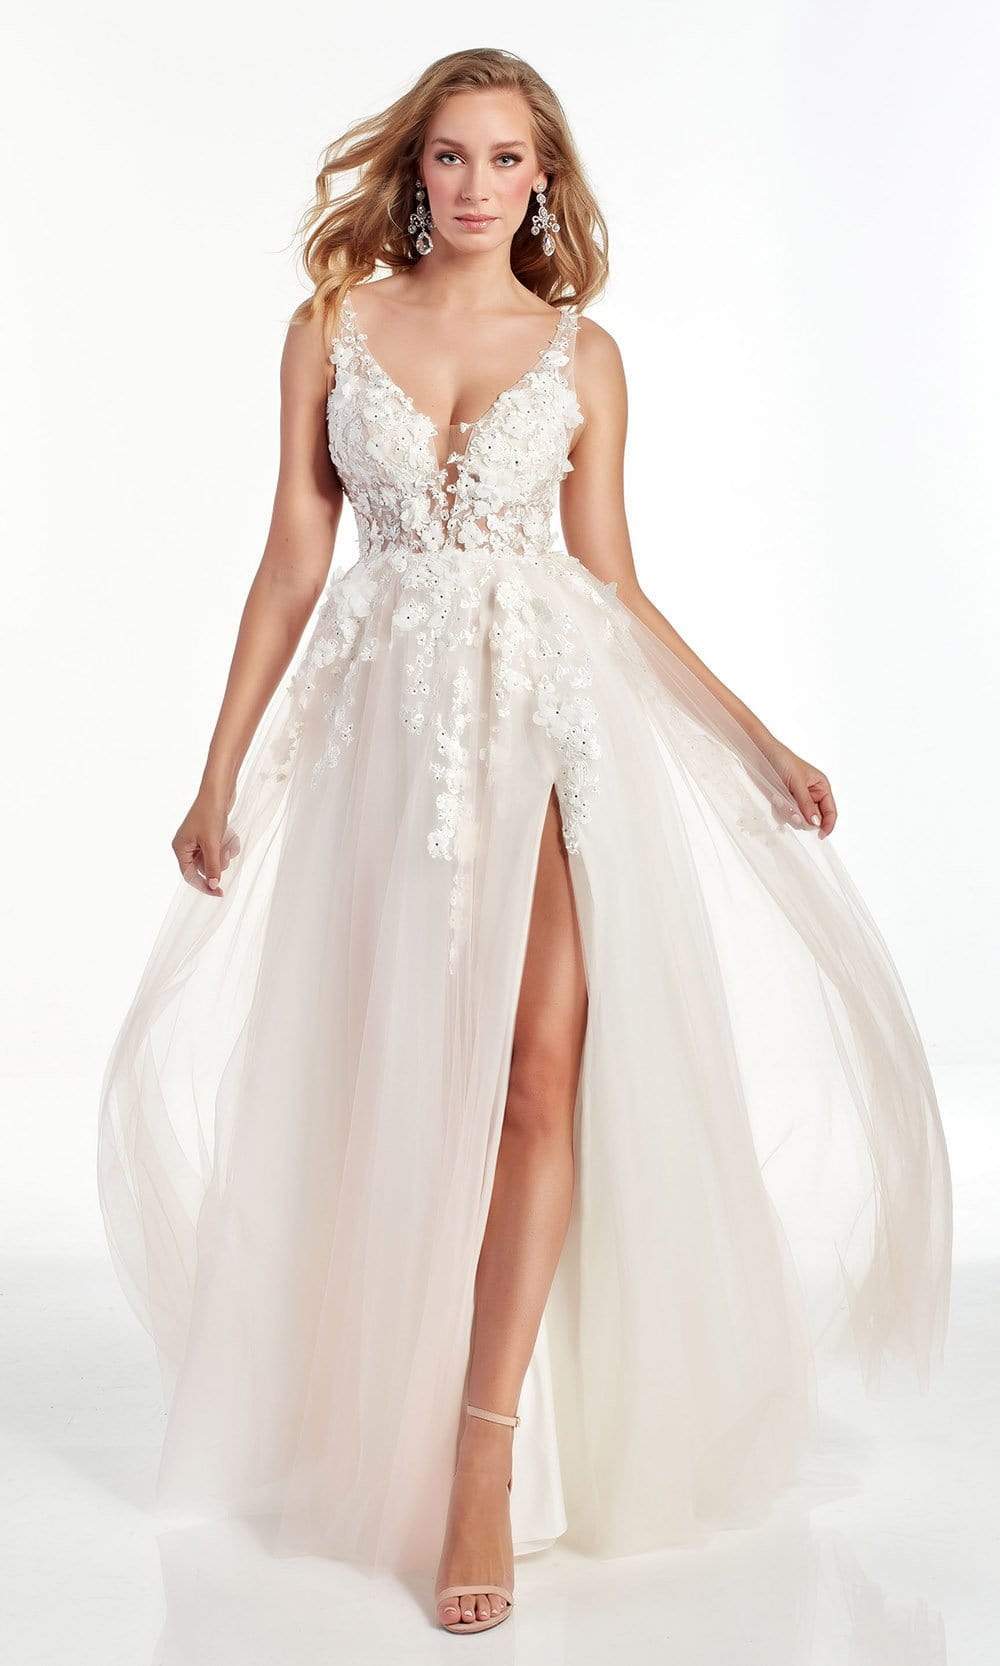 Alyce Paris - 60894 3D Floral Lace Tulle High Slit A-line Gown Prom Dresses 000 / Diamond White/Blush